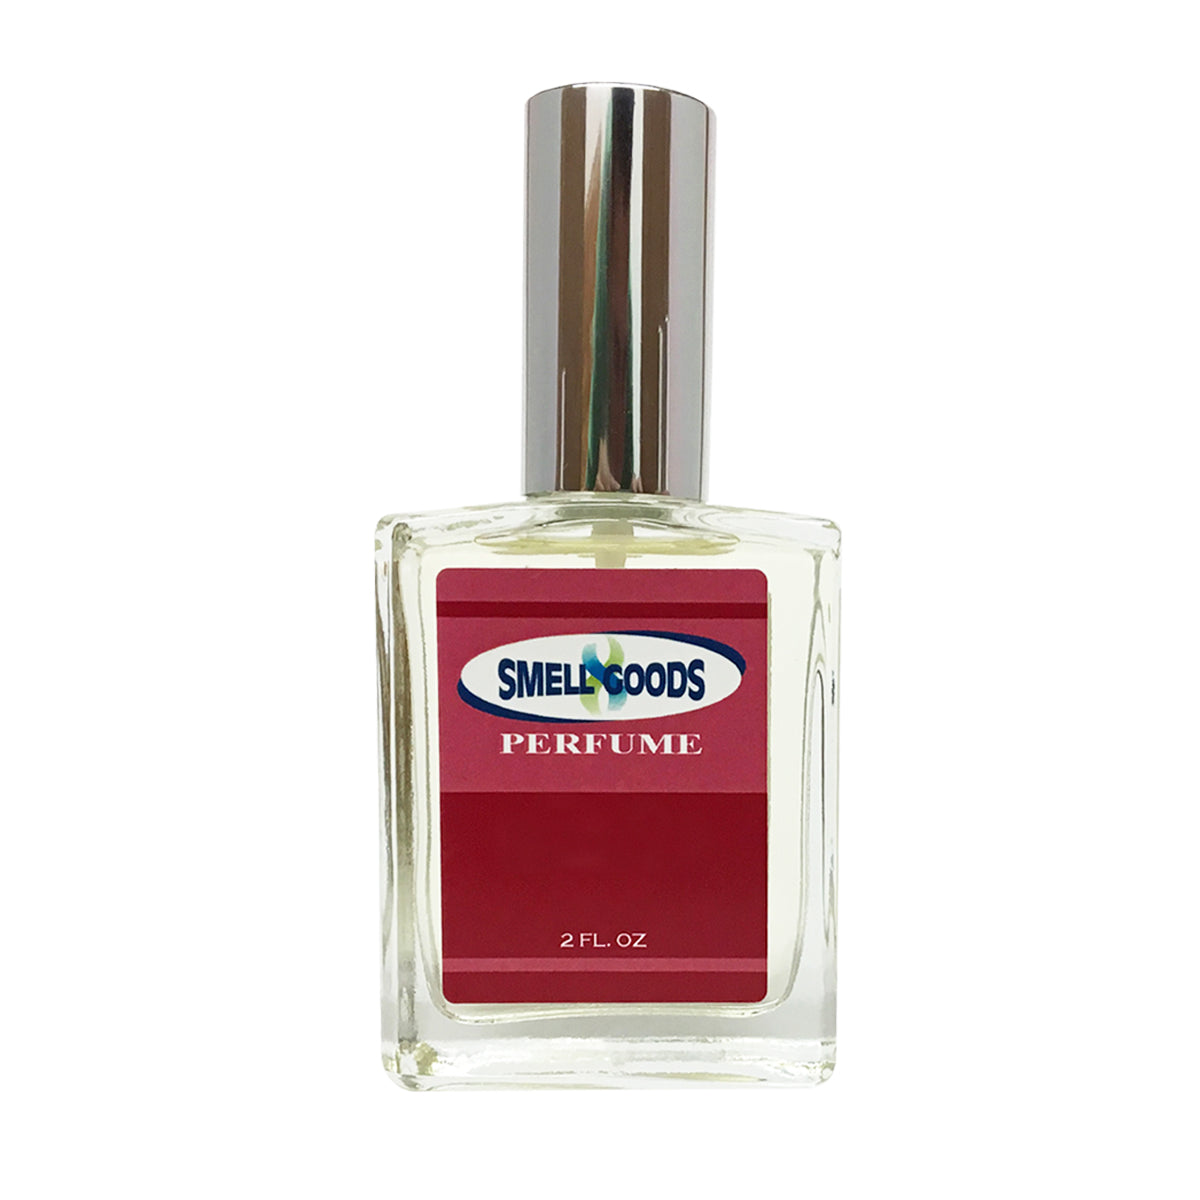 Chanel #5 Type (Women) Perfume Spray